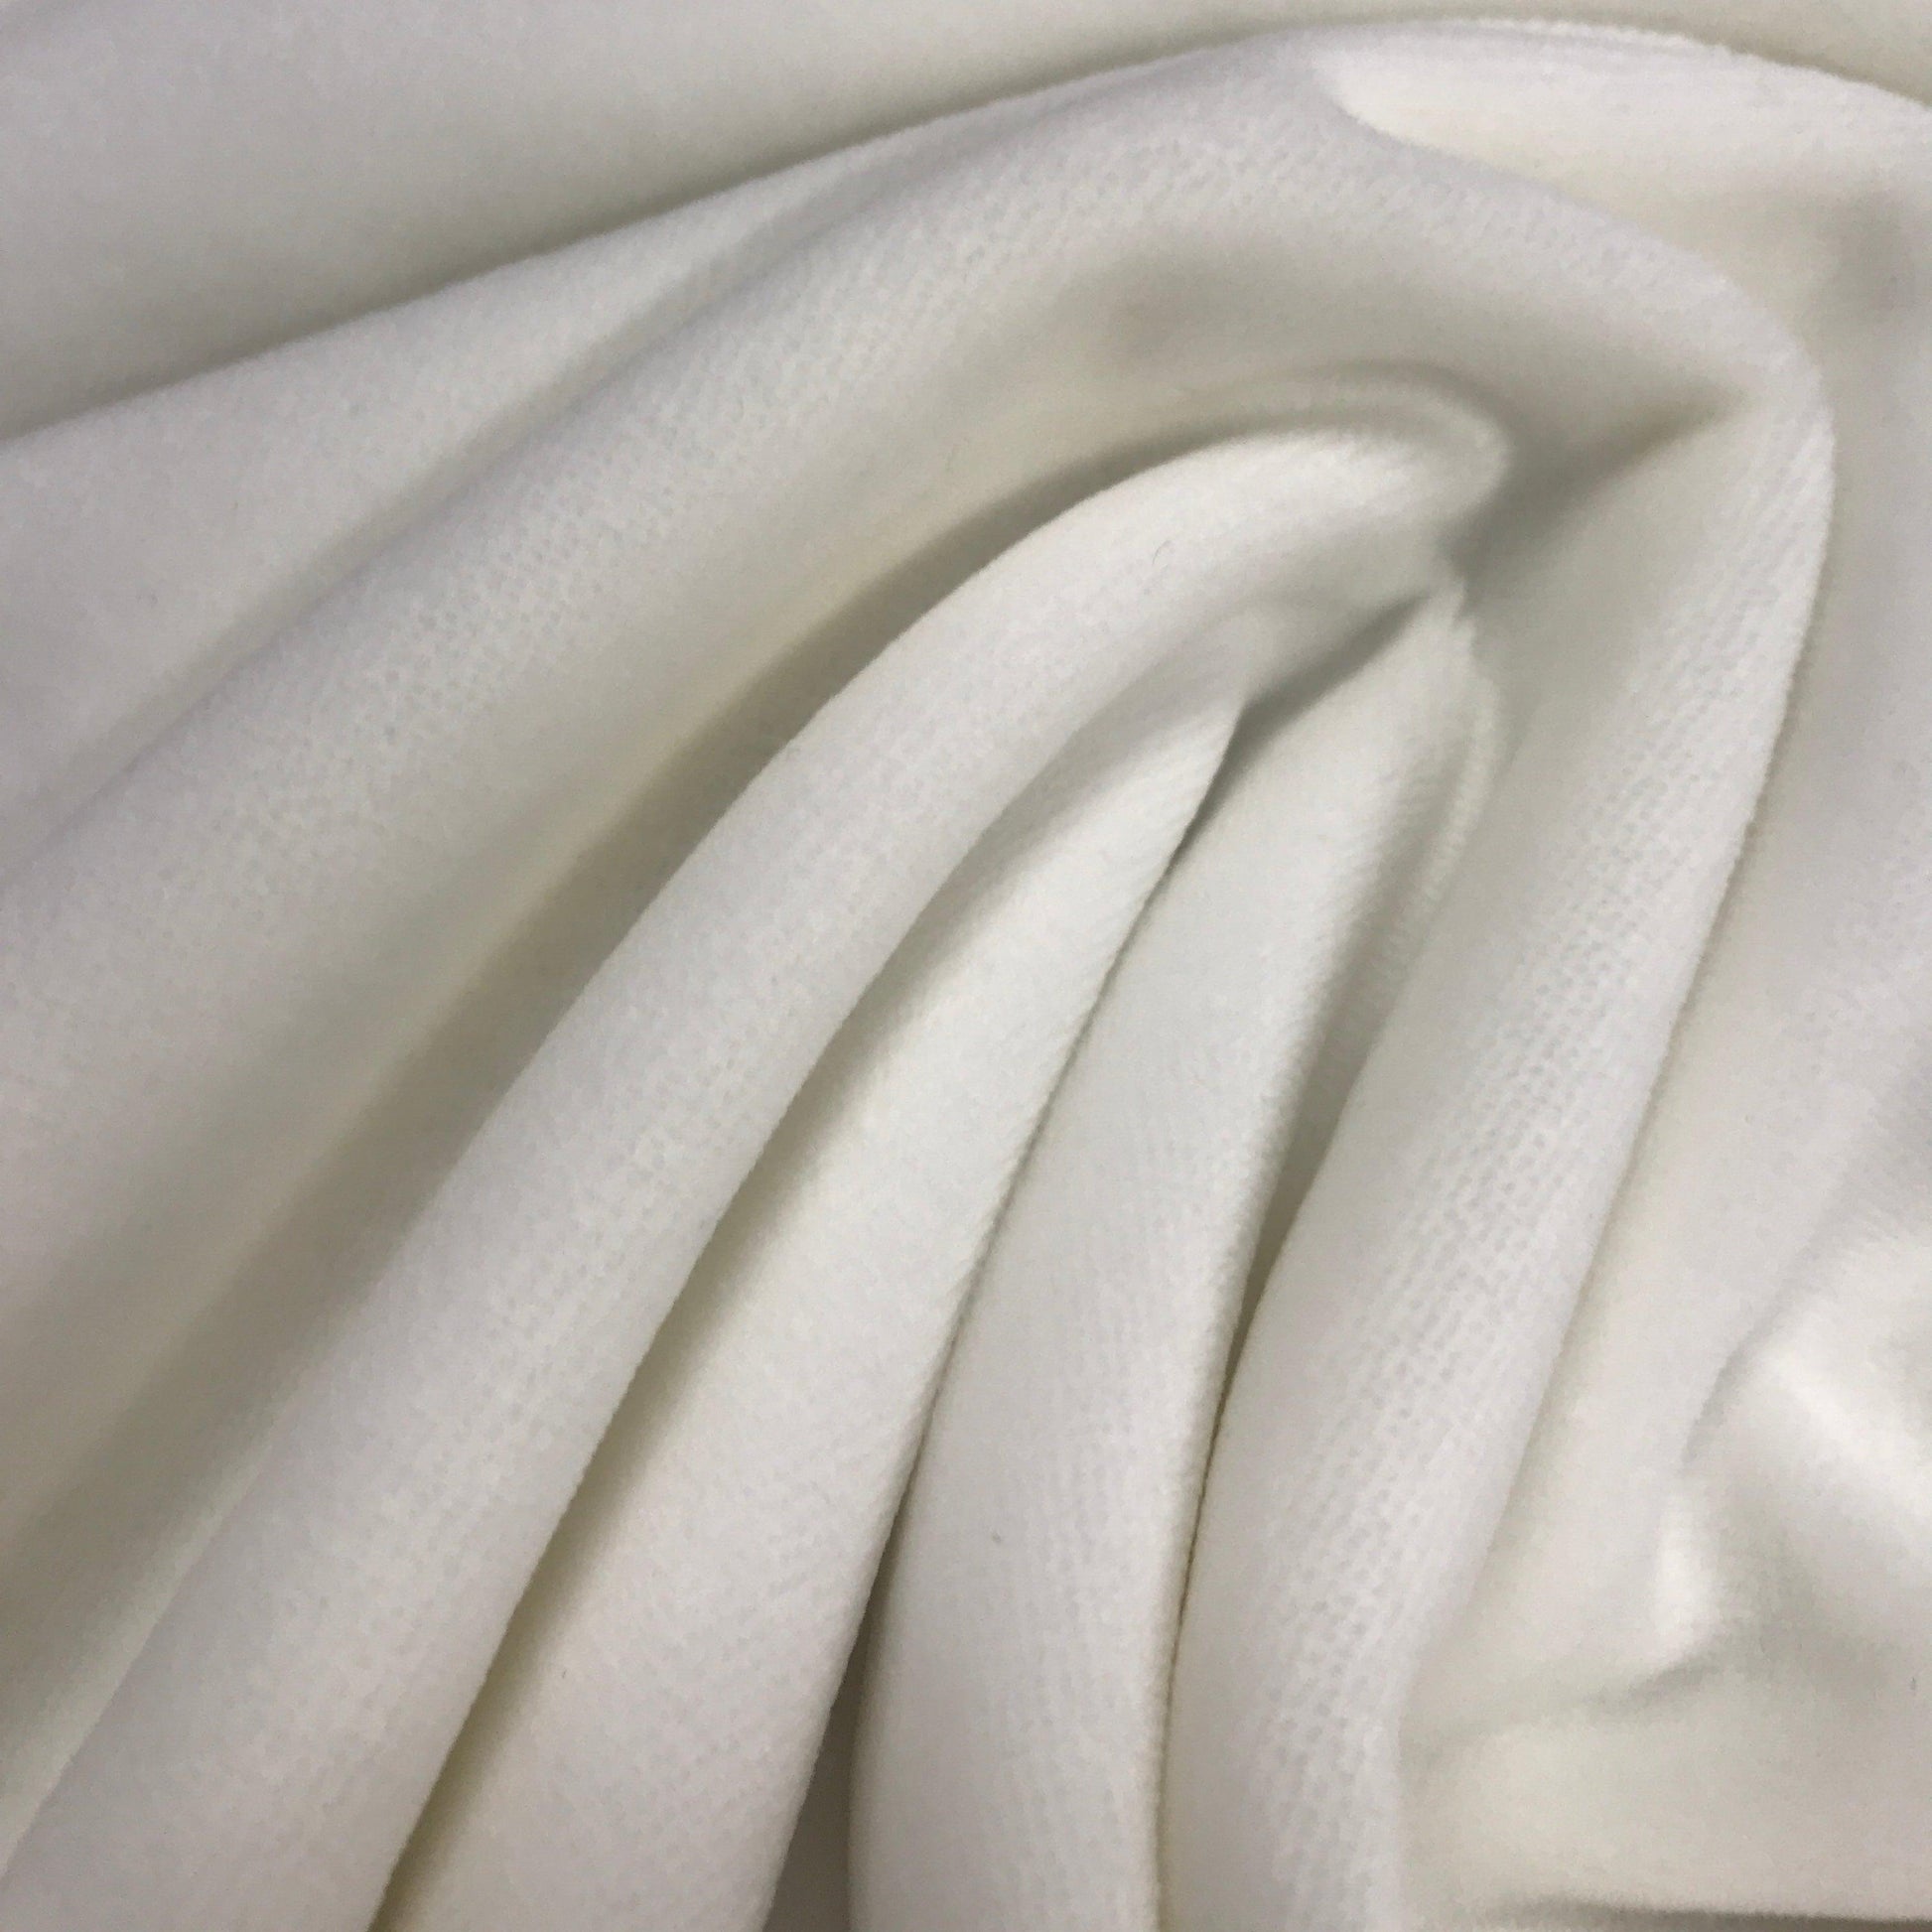 Off-White Organic Cotton Velour Fabric, $10.59/yd, 15 yards - Nature's Fabrics